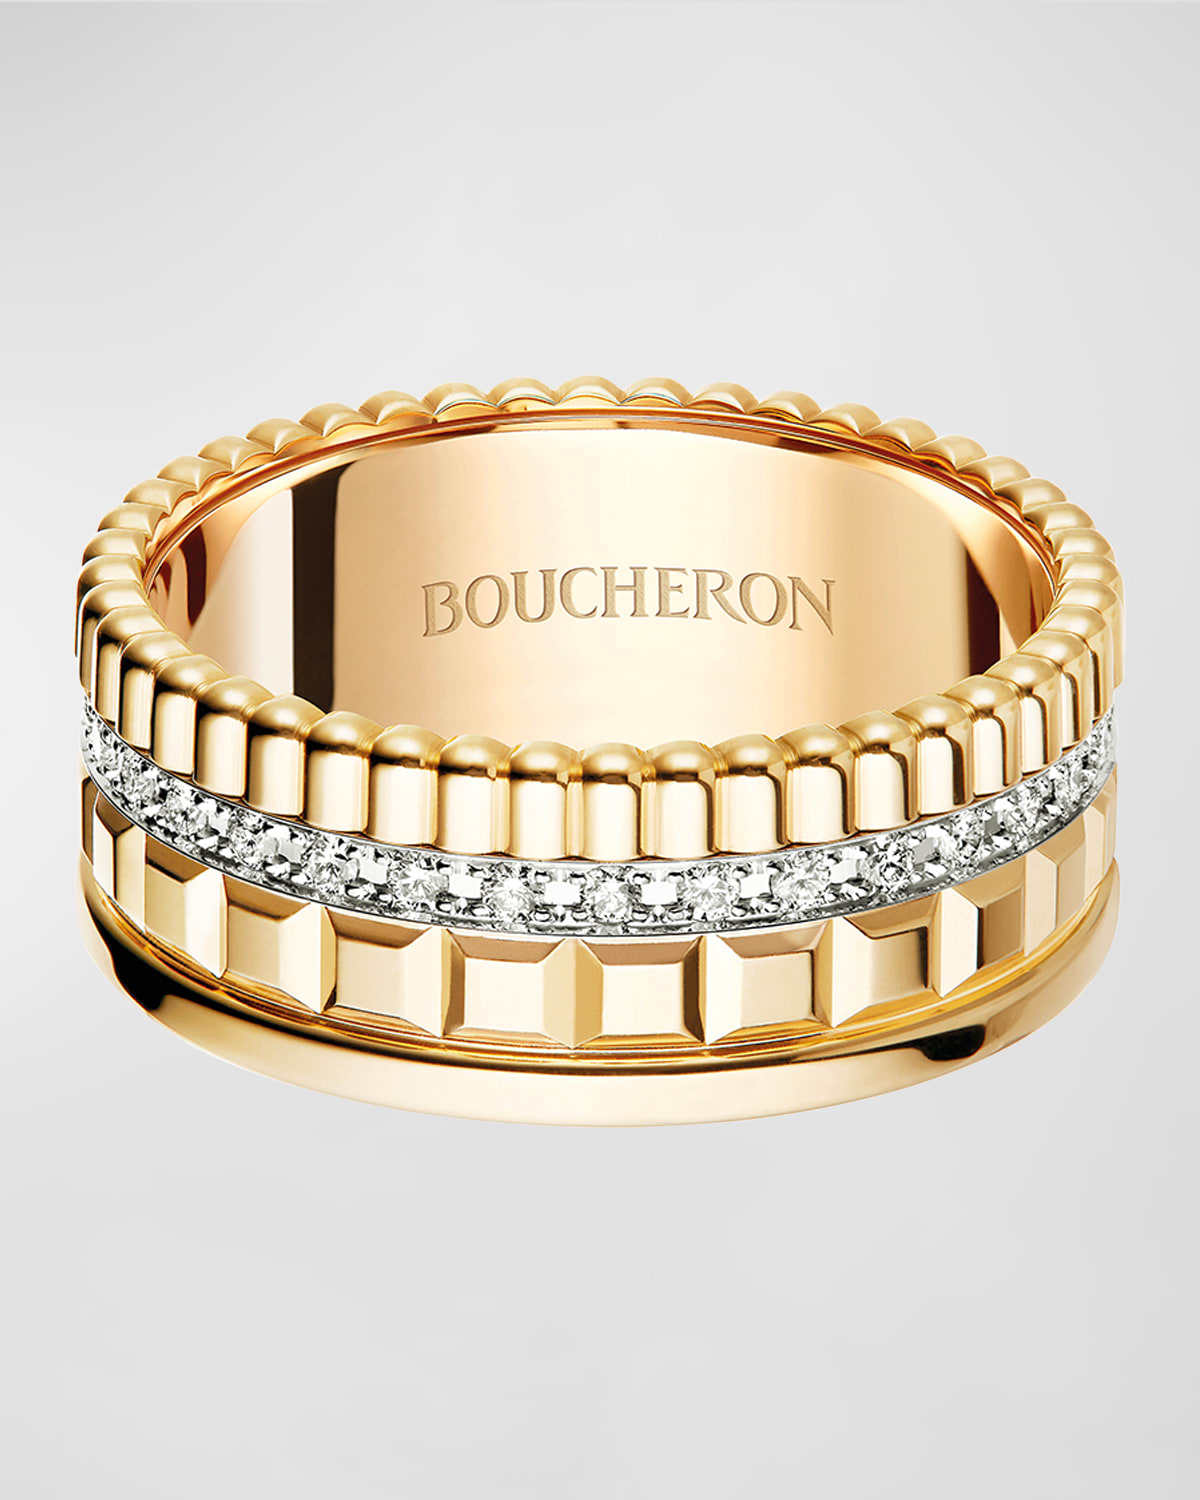 Boucheron Quatre 18k Gold Band Ring with Diamonds, Size 54